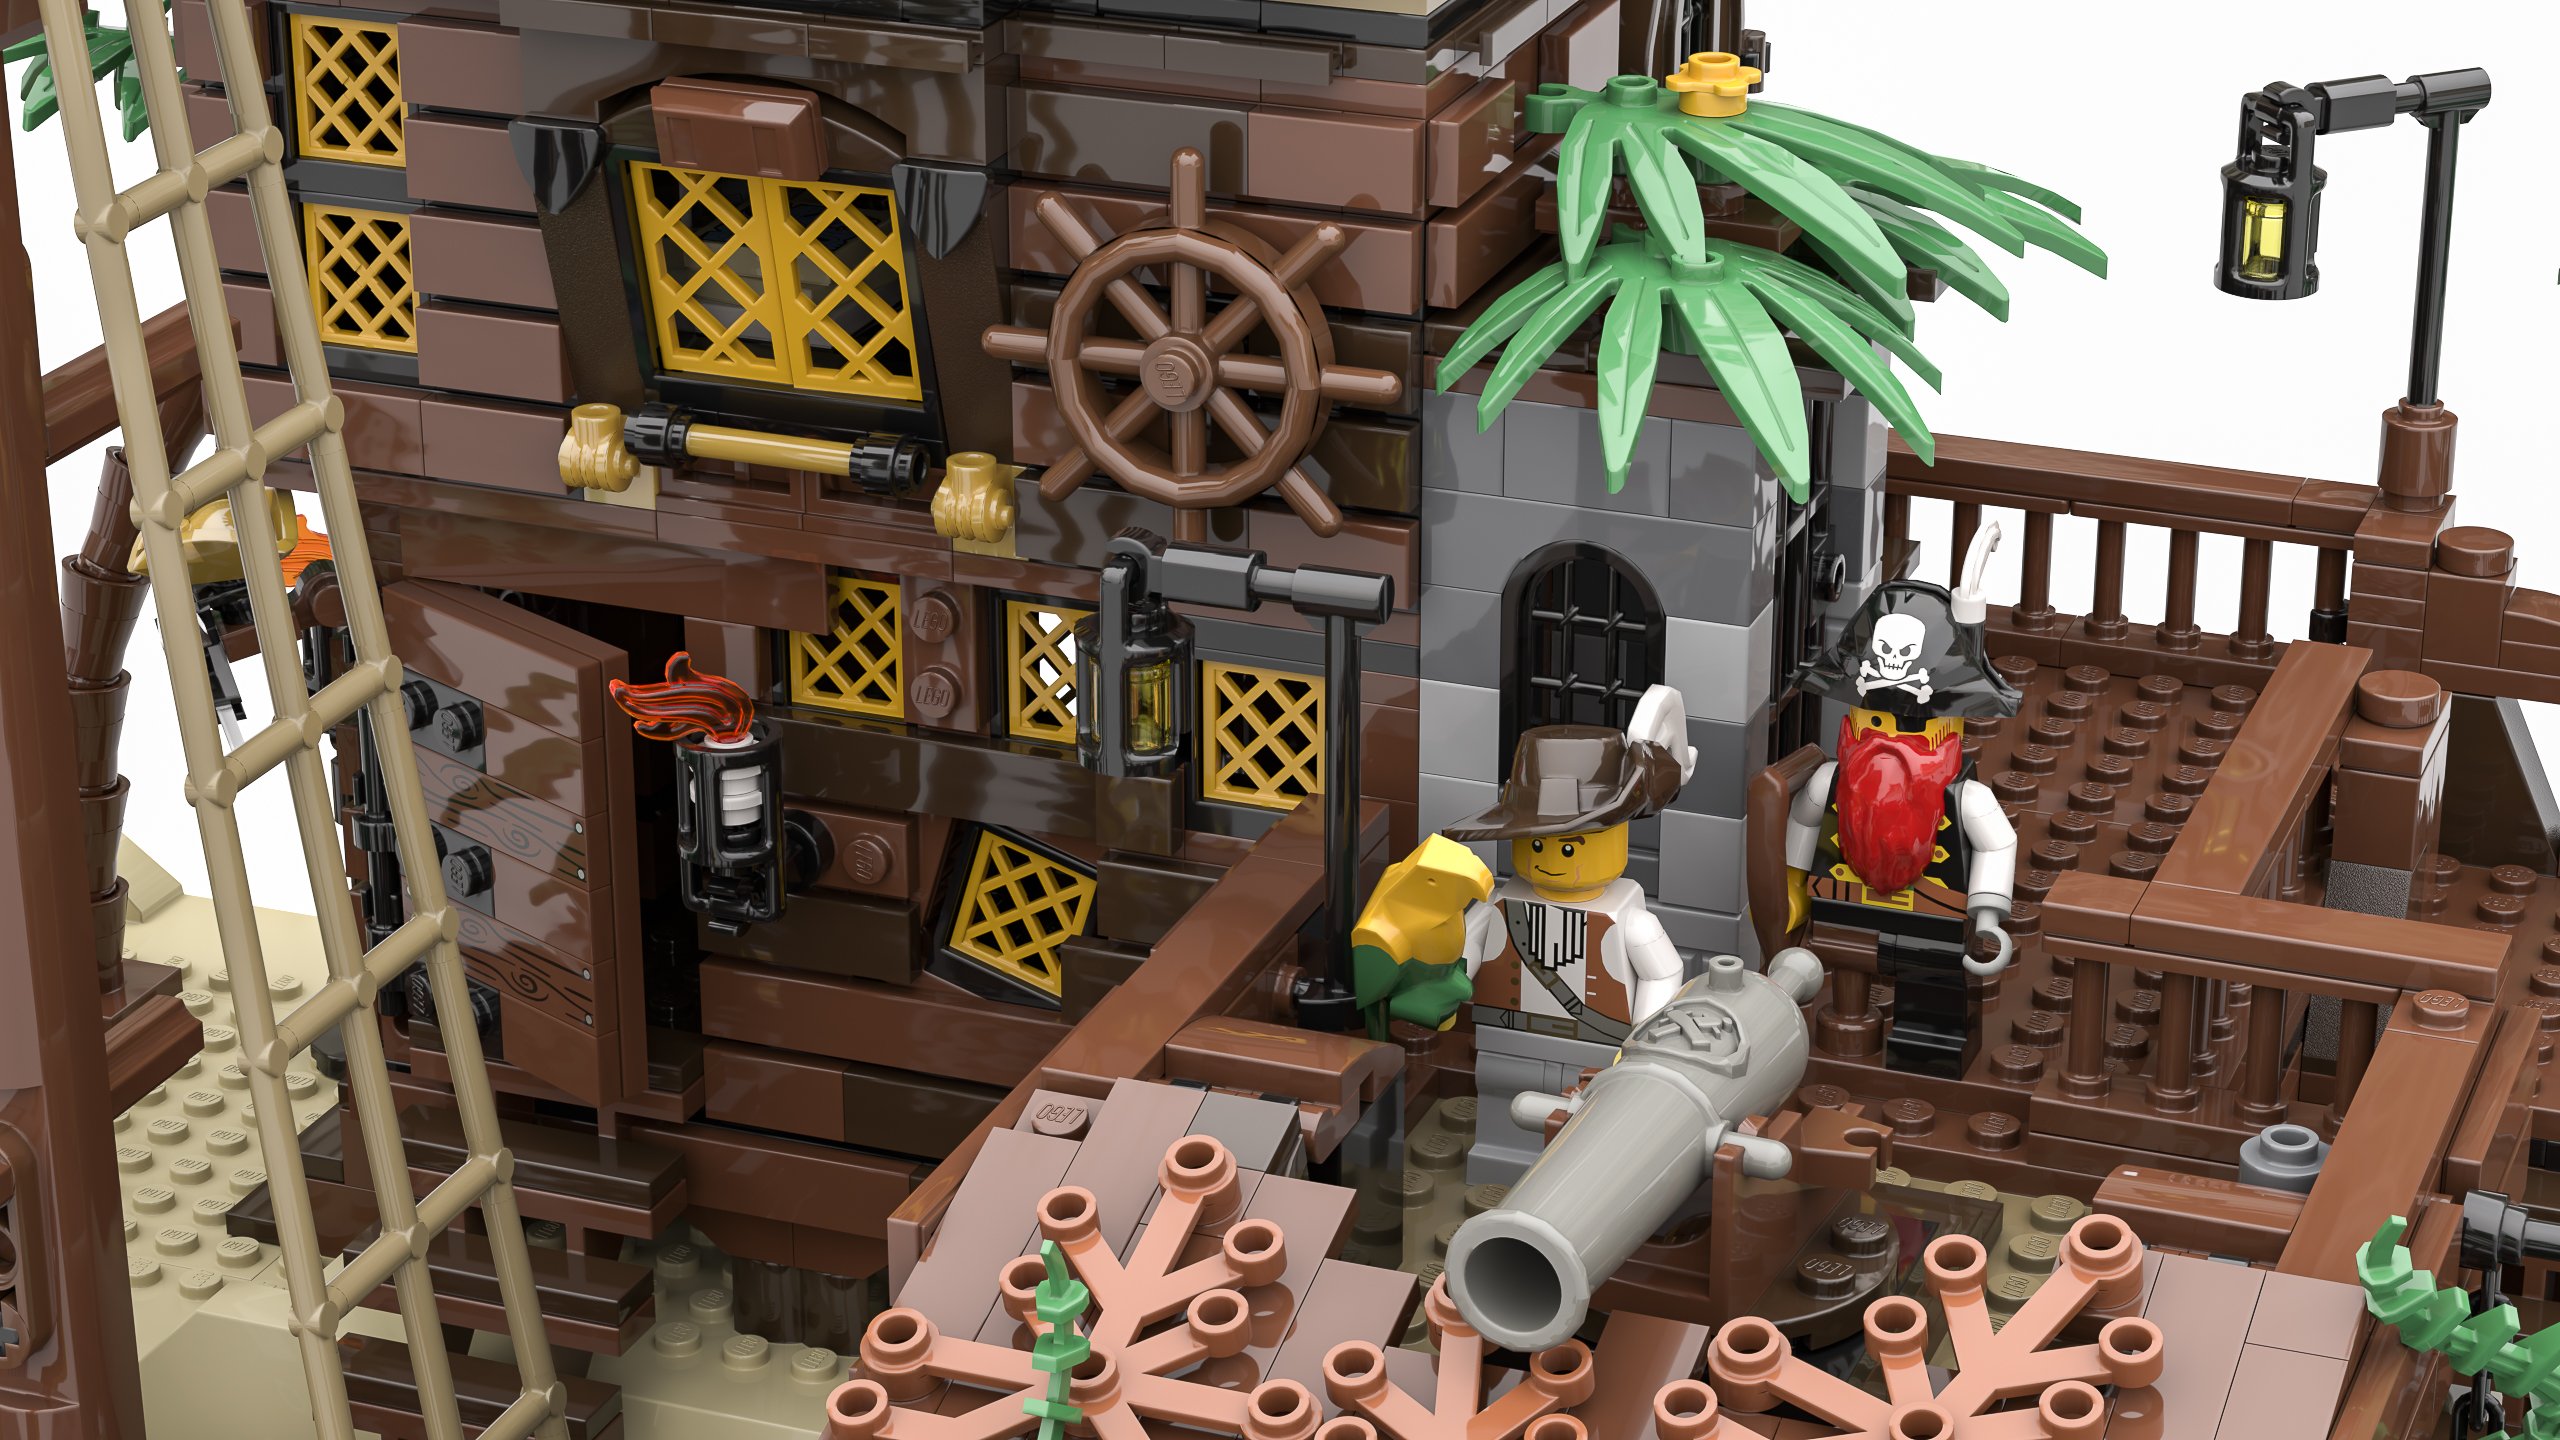 LEGO Ideas] The Pirate Bay!! - Pirate MOCs - Eurobricks Forums